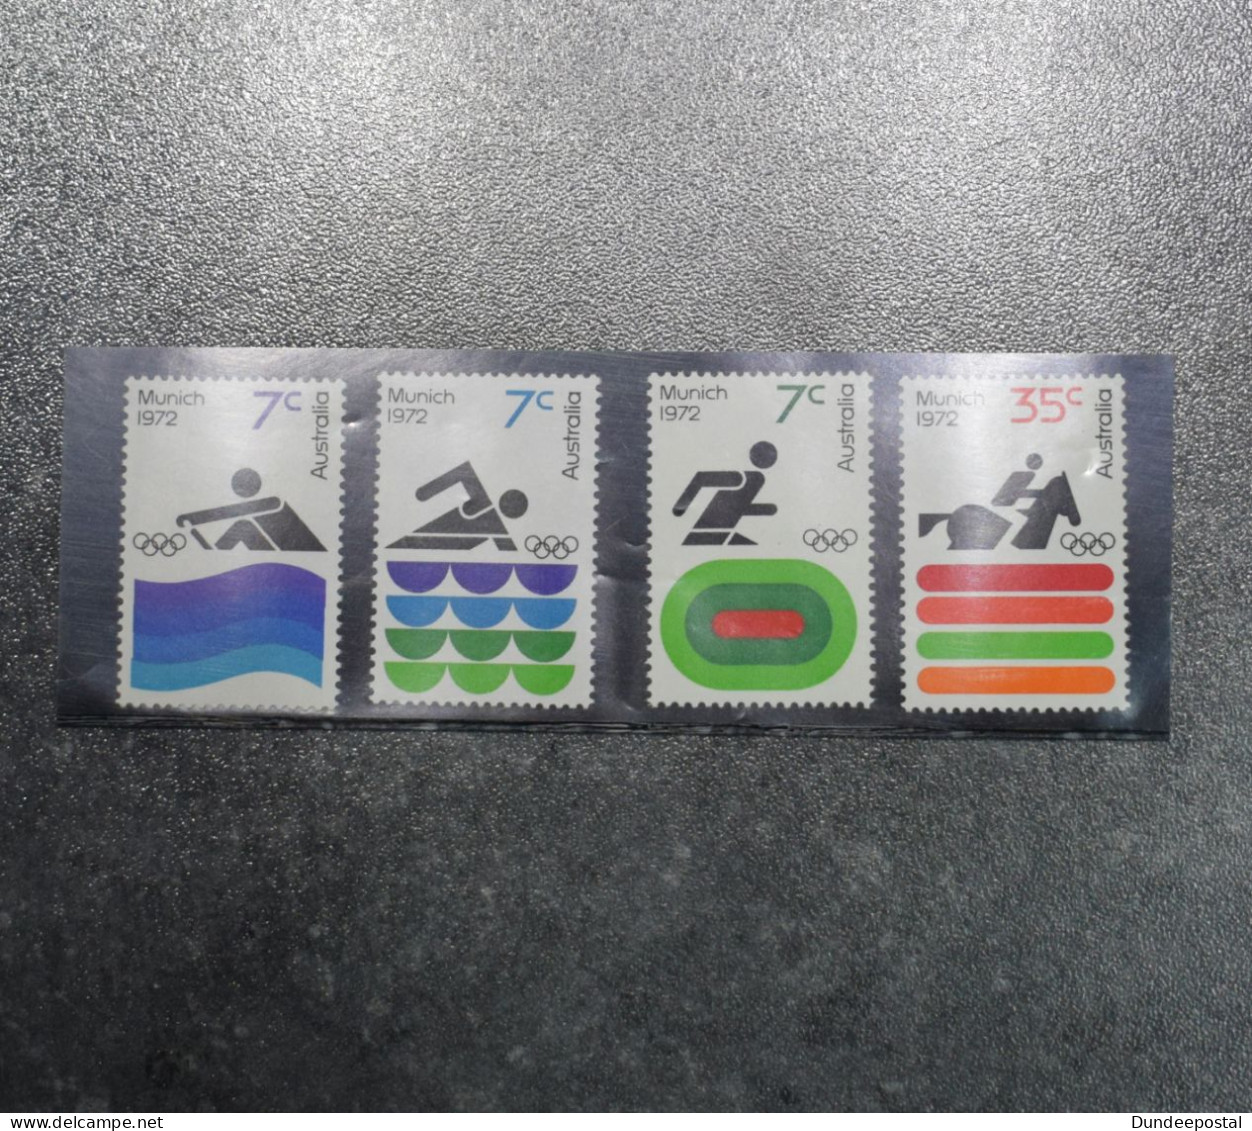 AUSTRALIA  STAMPS SOlympics Set  1972     MNH ~~L@@K~~ - Mint Stamps